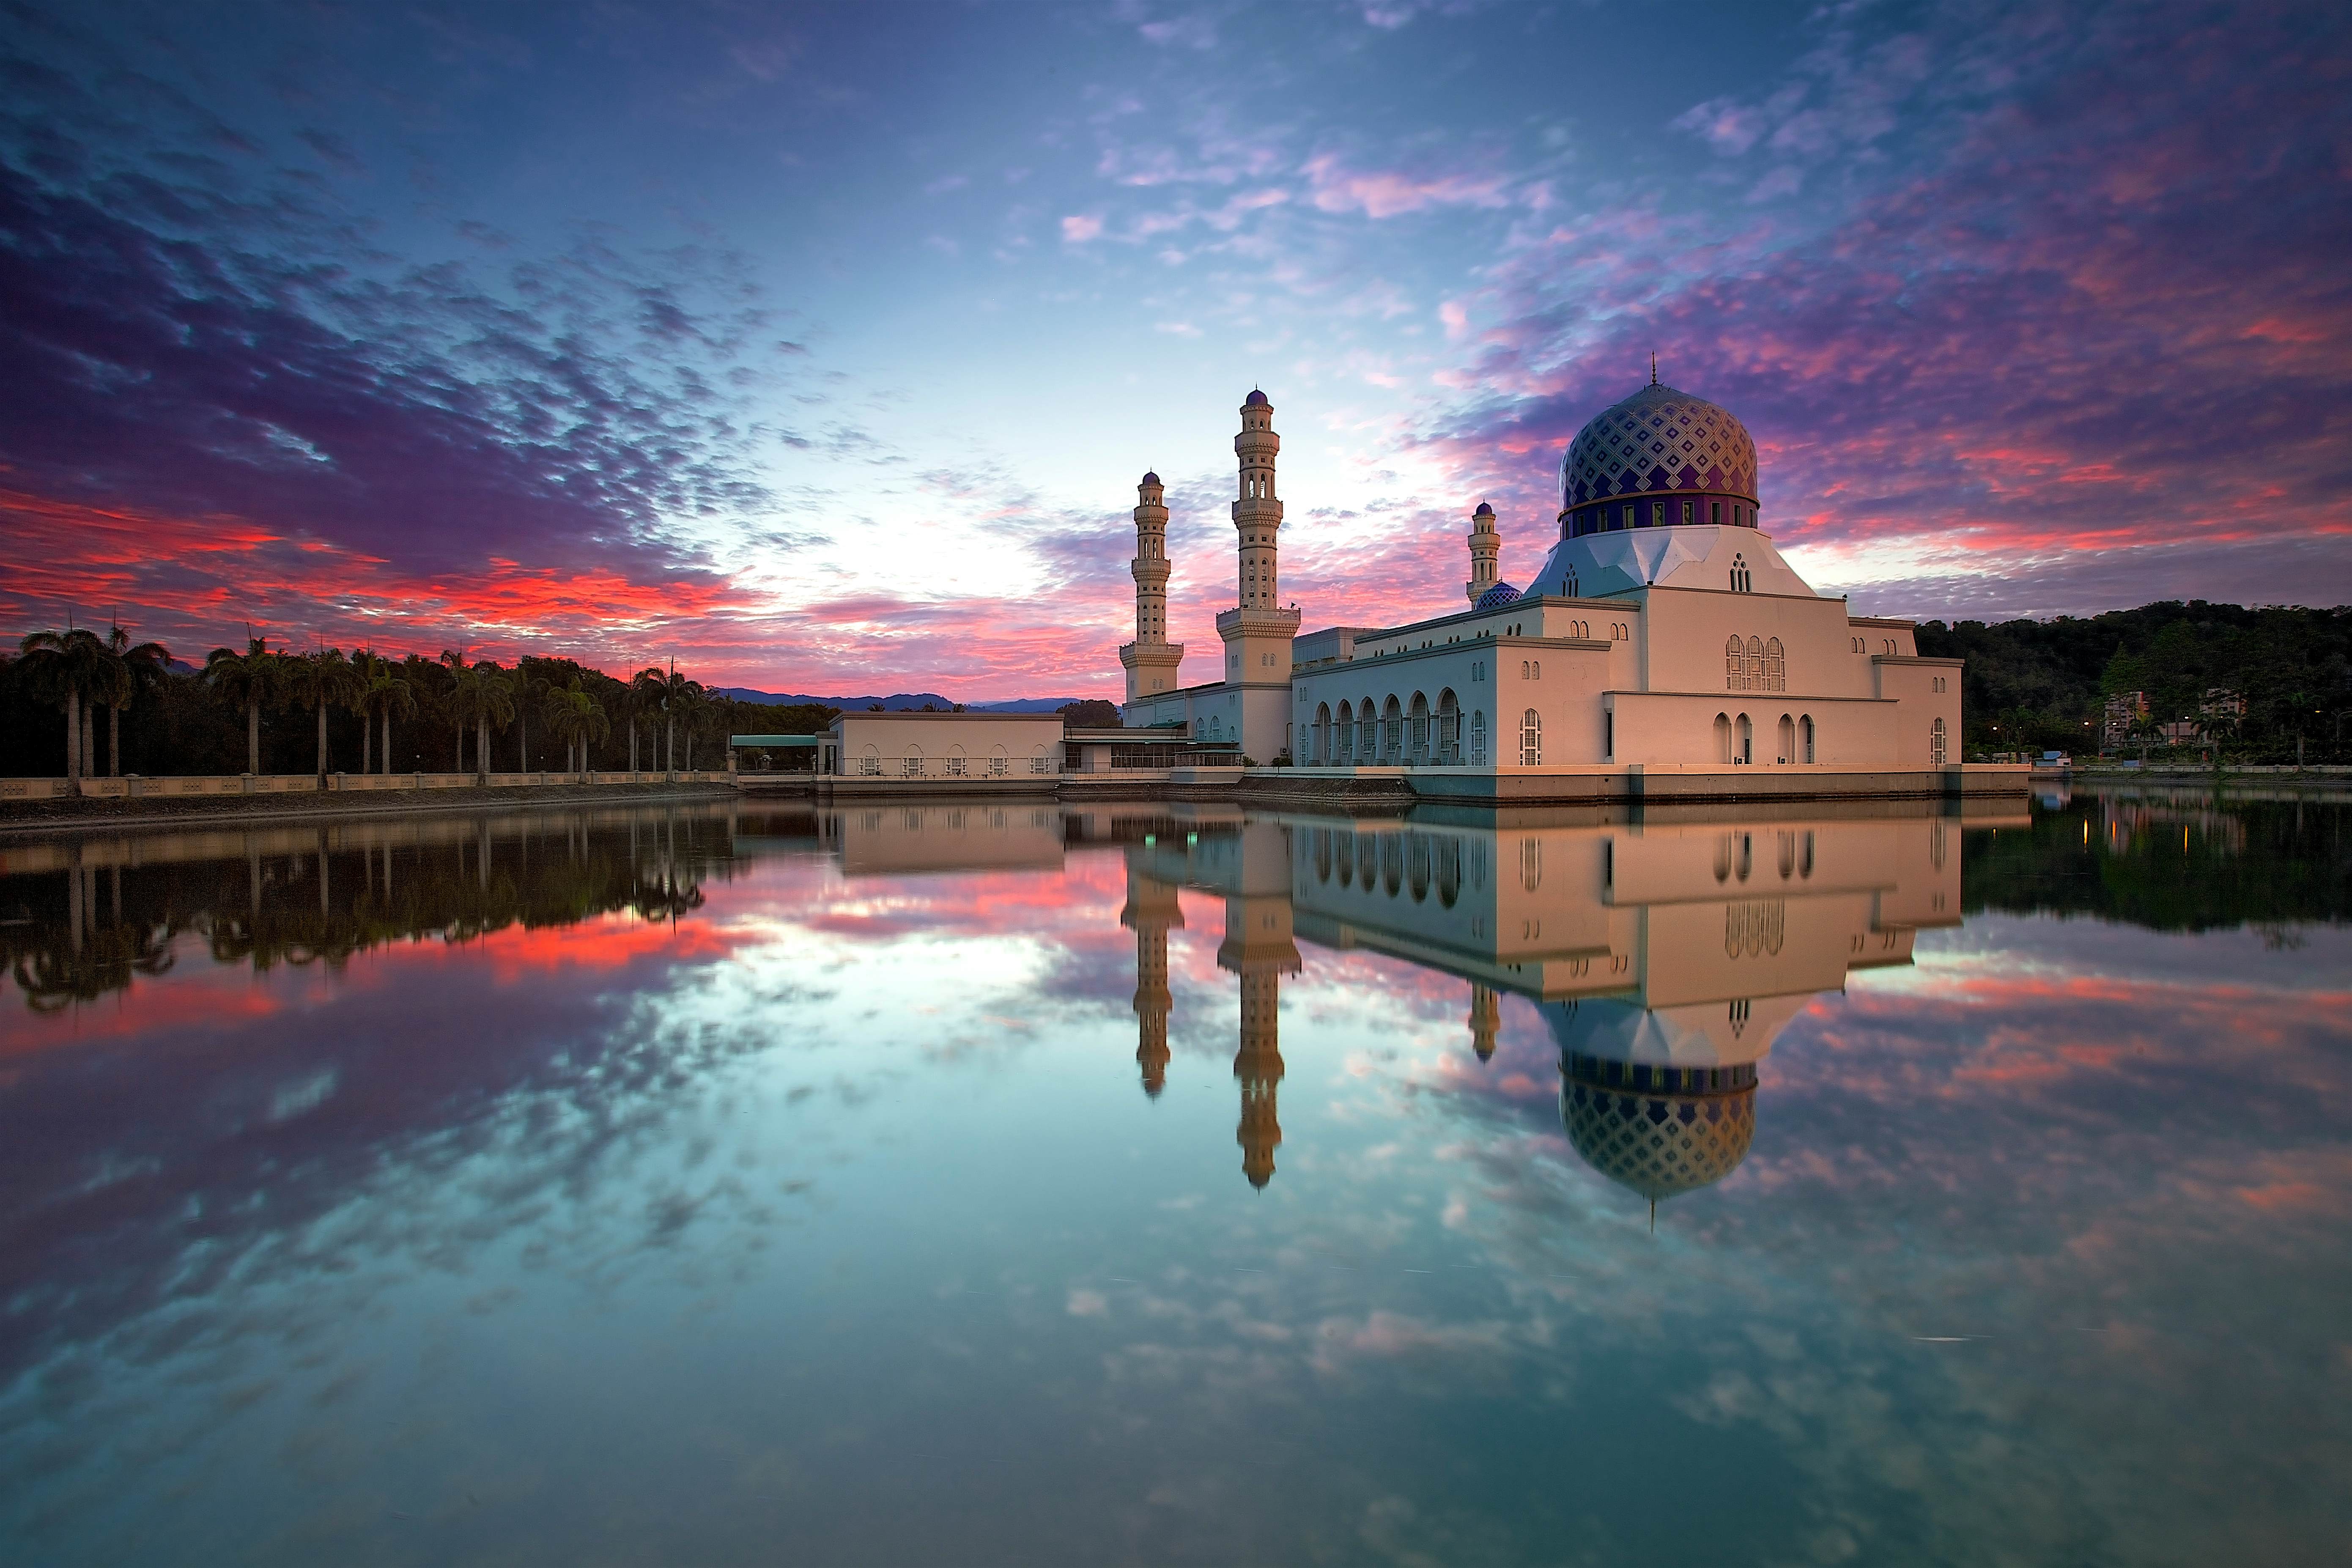 Kota Kinabalu travel | Sabah, Malaysia - Lonely Planet